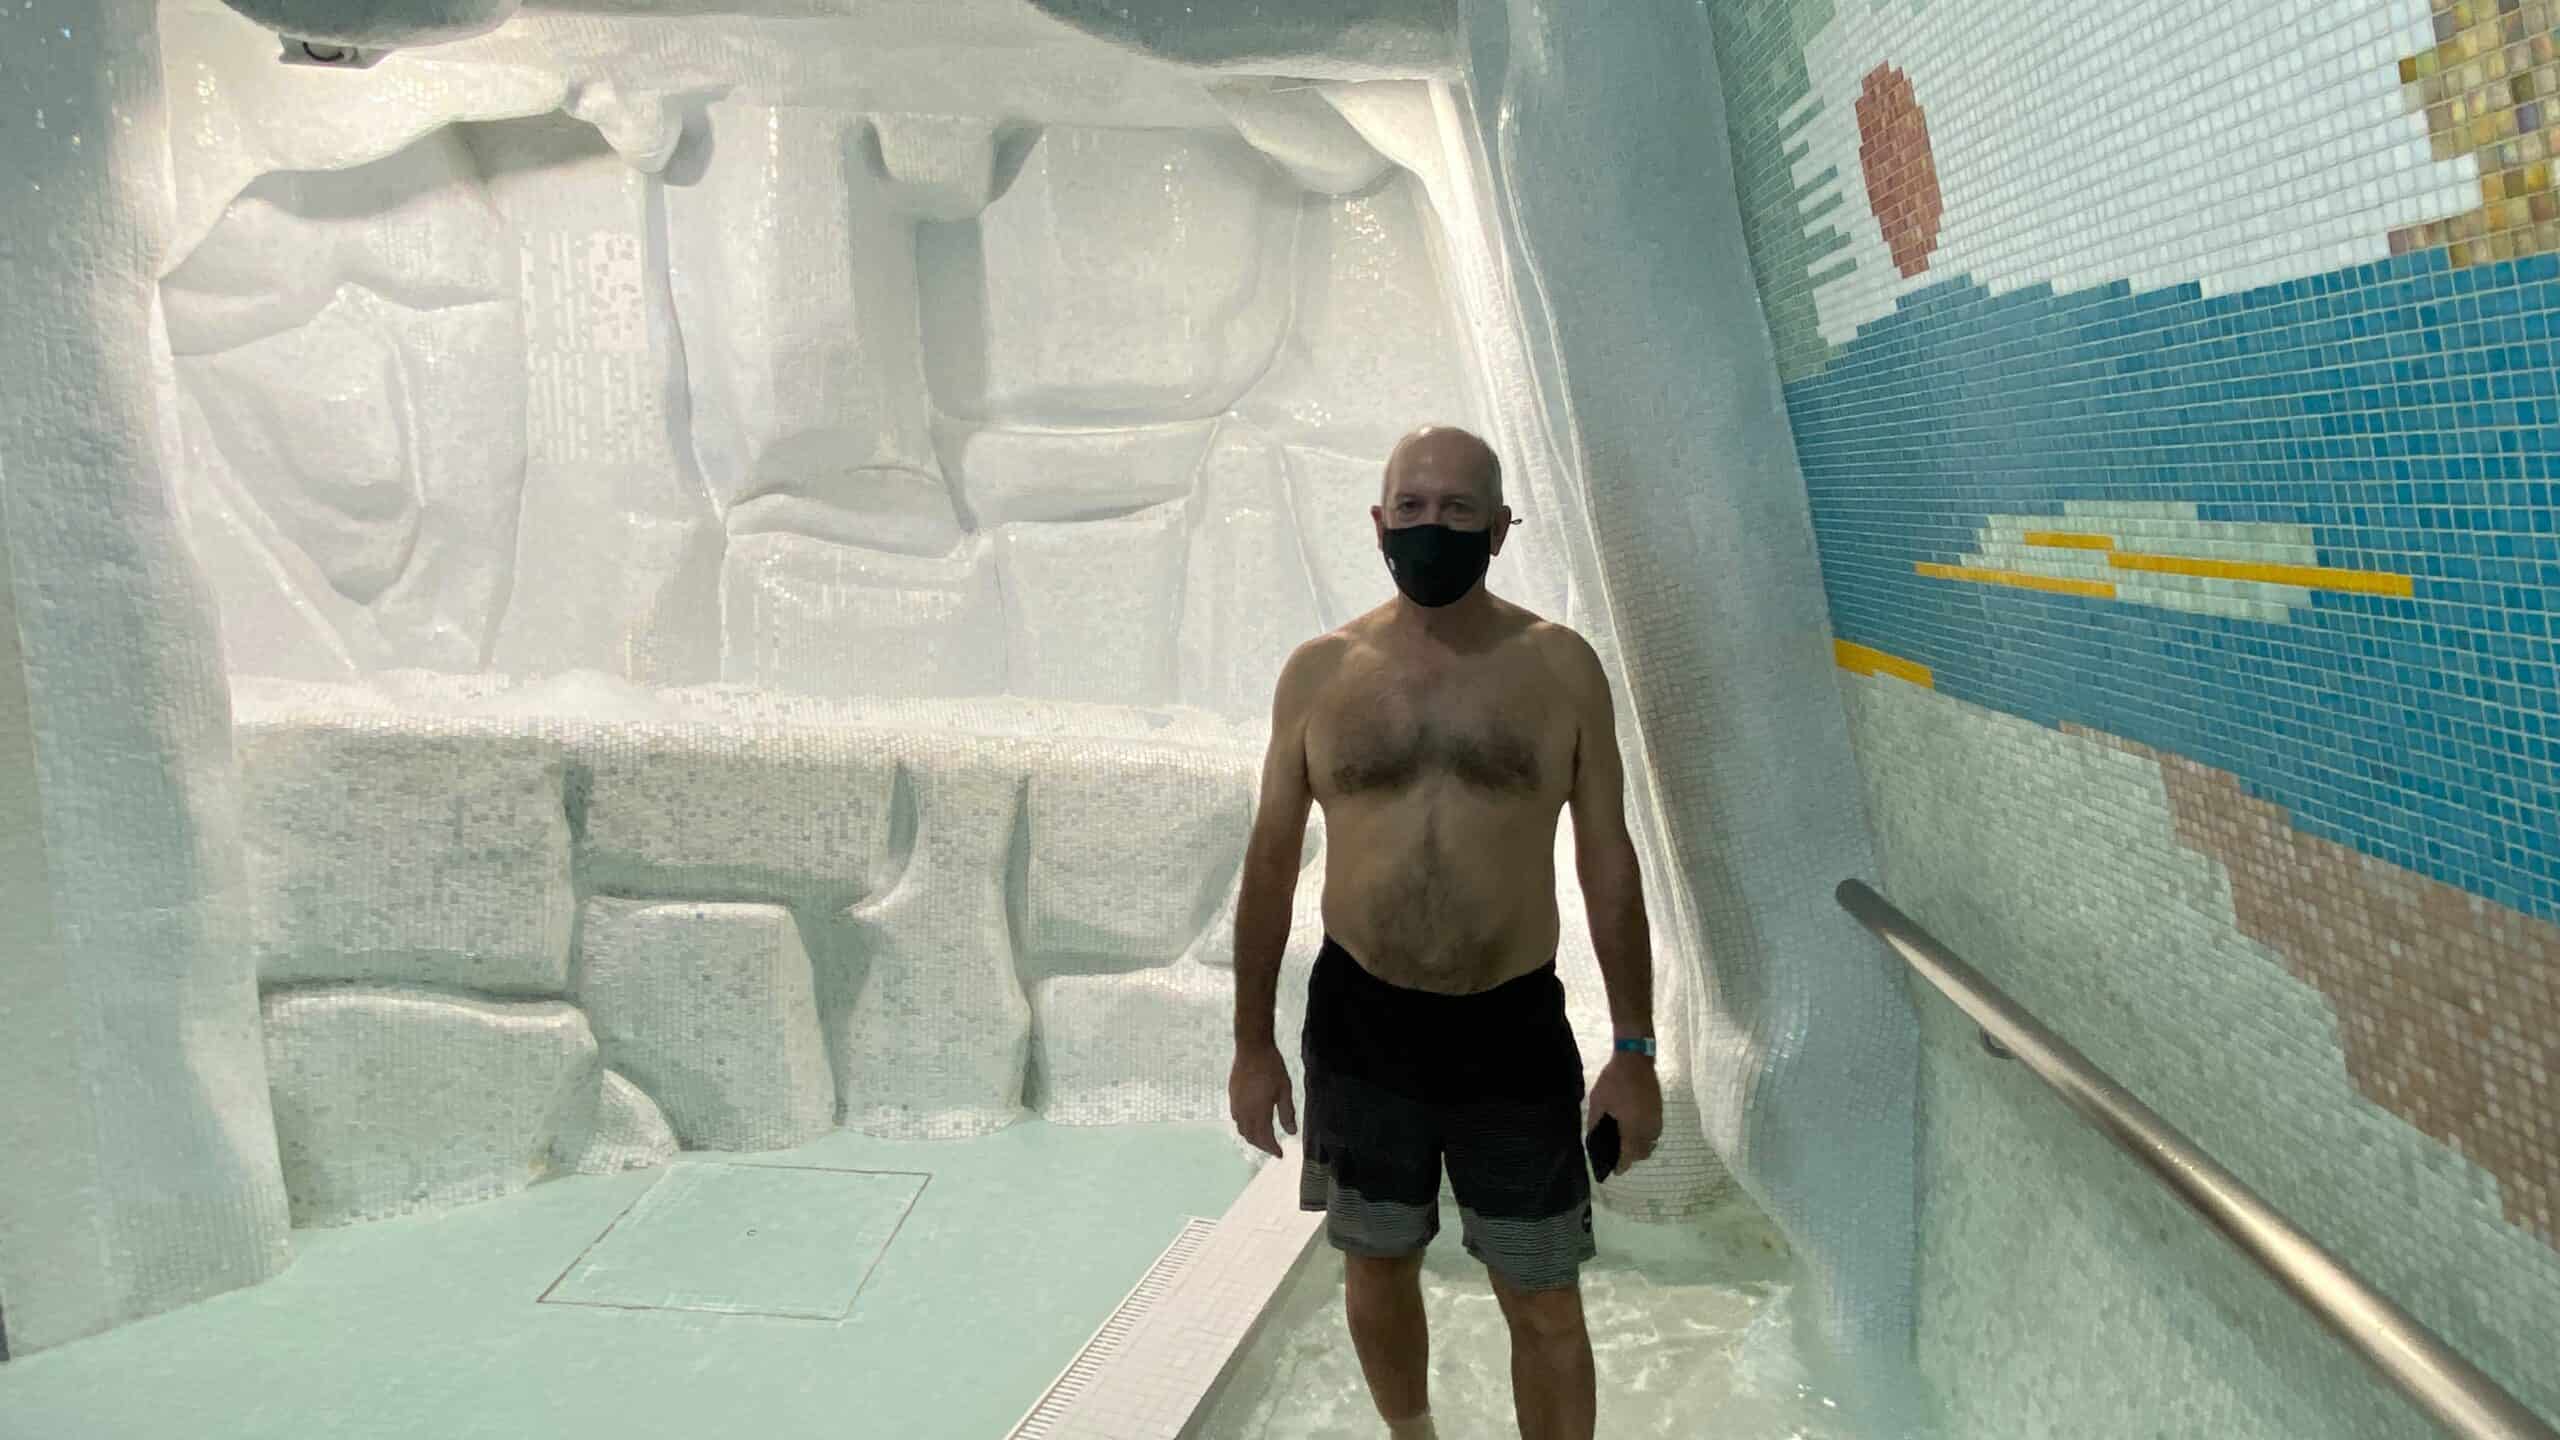 Icelandic ice bath